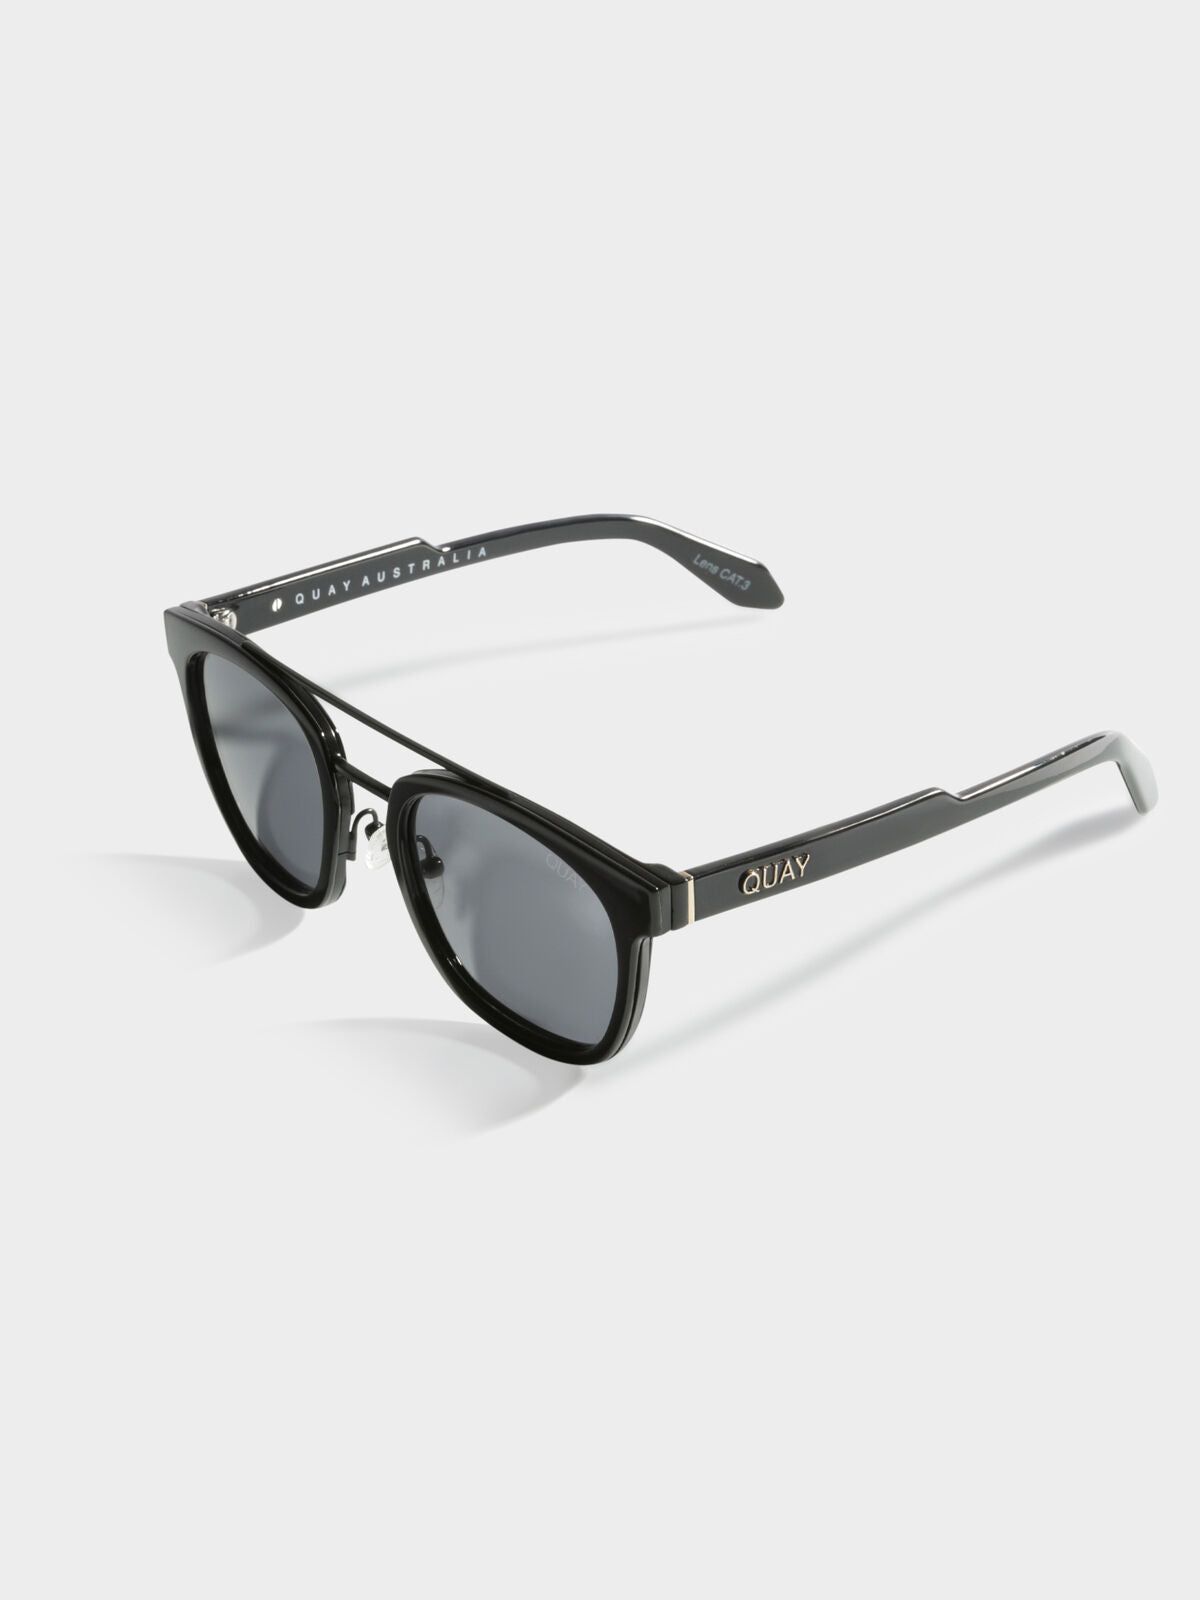 Coolin Sunglasses in Black Smoke